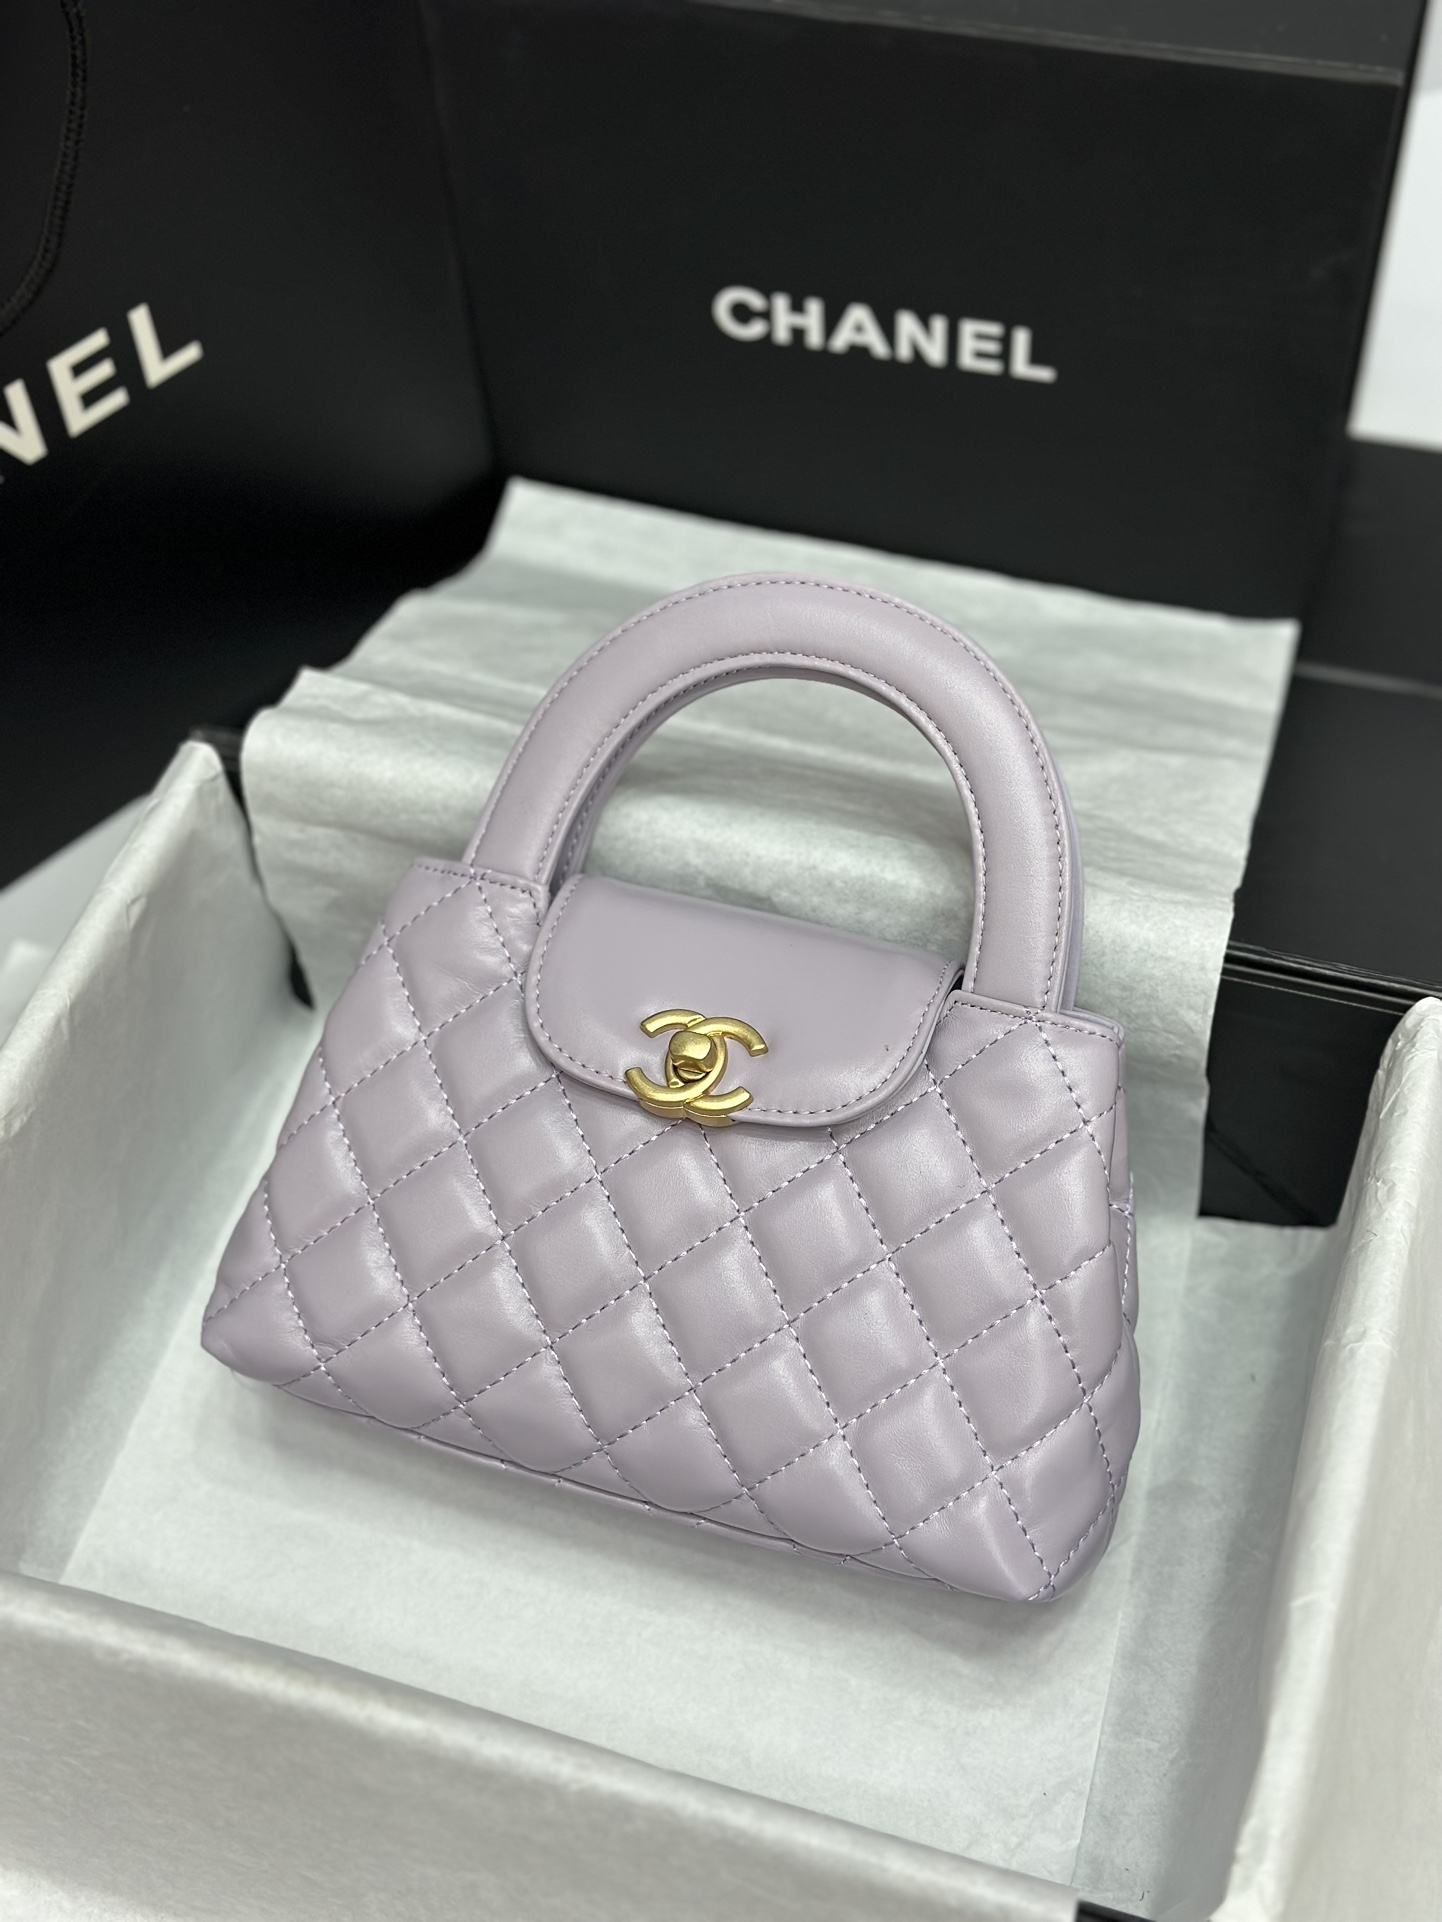 Chanel Kelly bag purple handbag